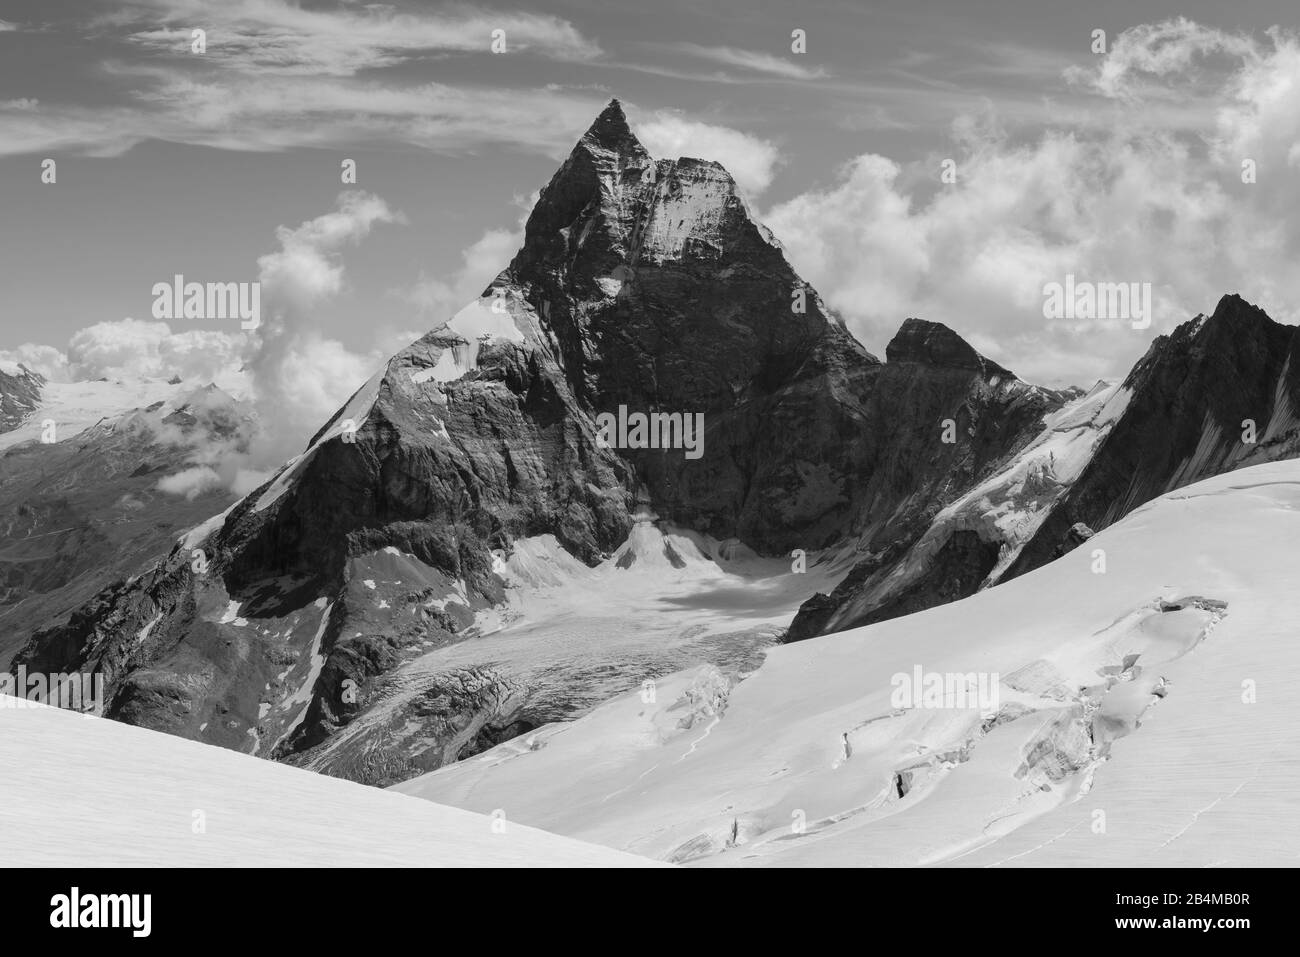 Svizzera, Vallese, Haute Route Chamonix Zermatt, ghiacciaio Stockji con Cervino - Zmuttgrat, West Face e Liongrat Foto Stock